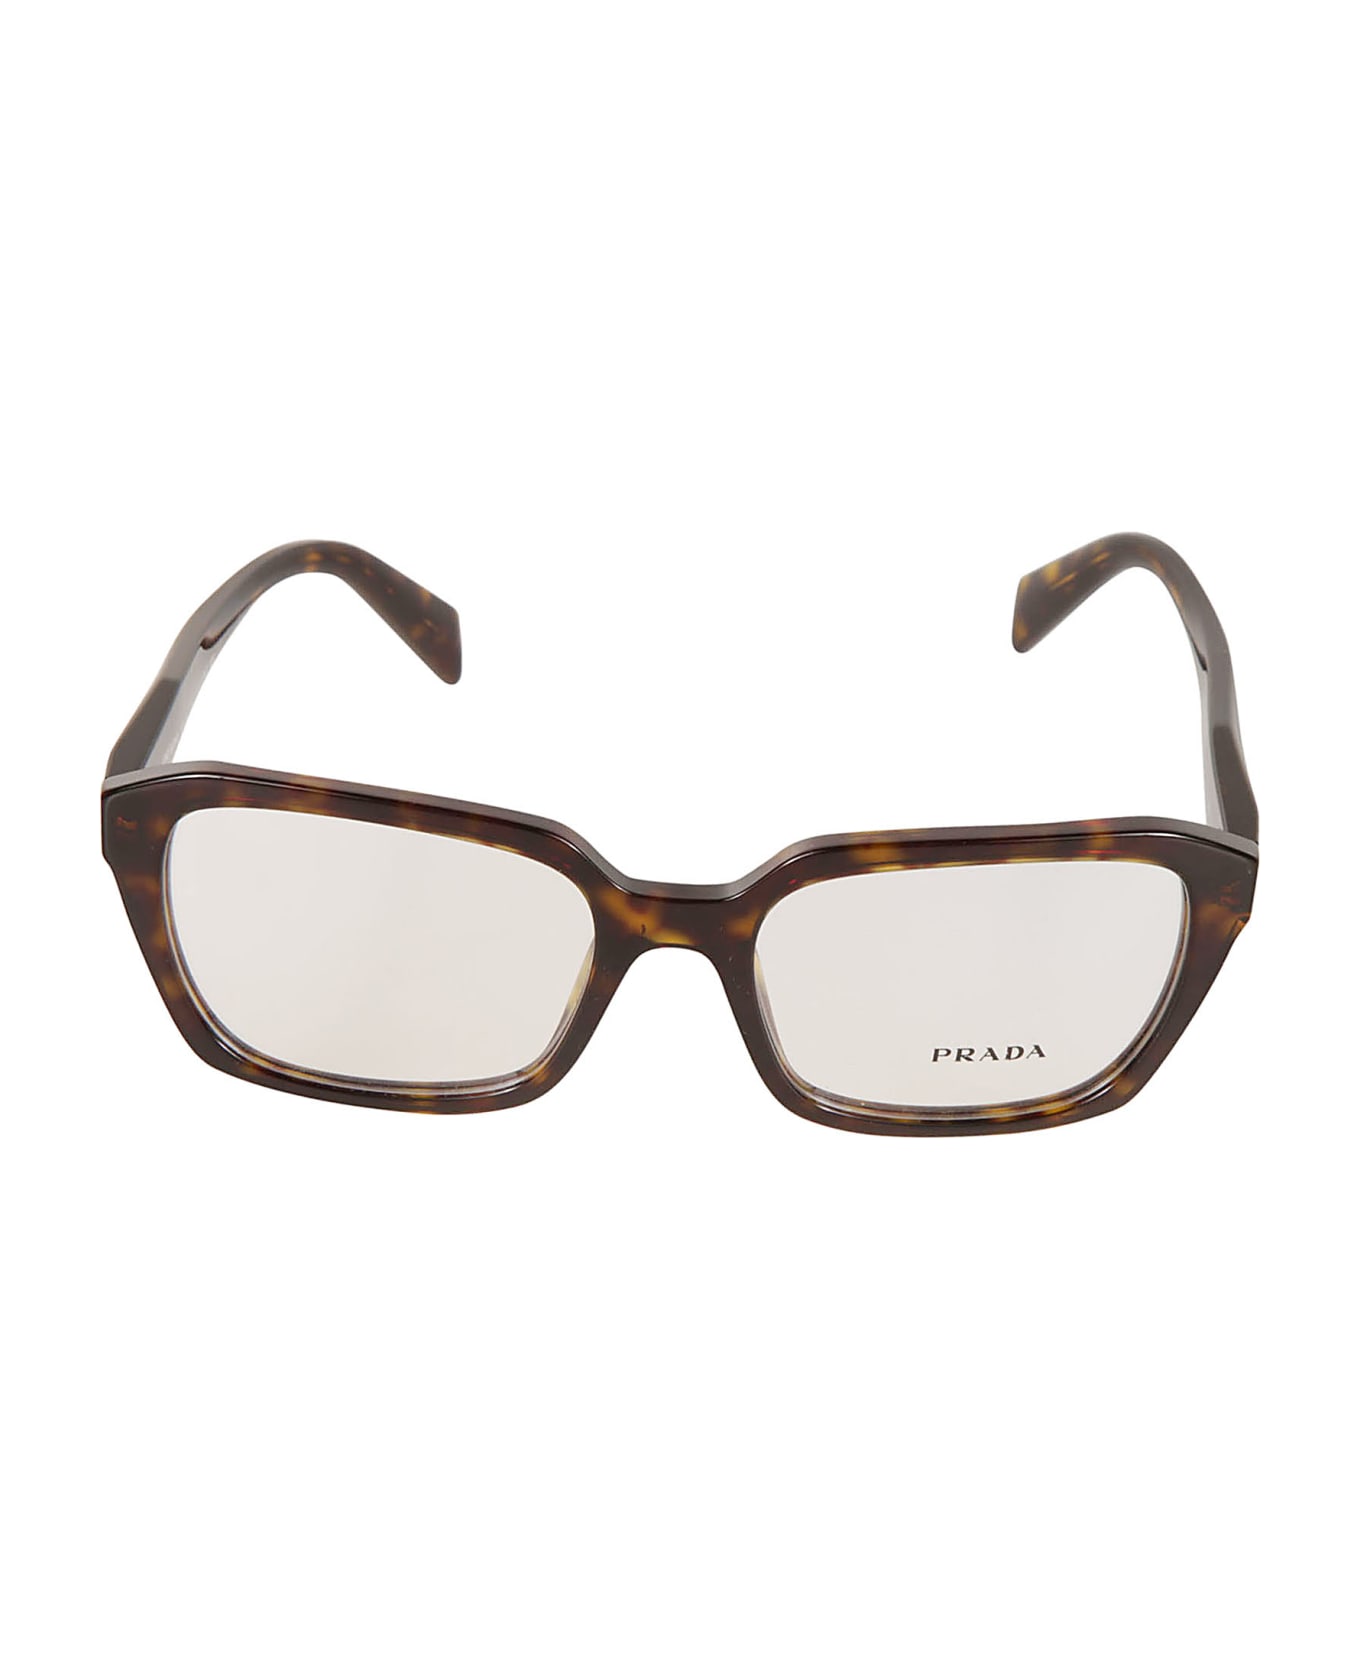 Prada Eyewear Vista Frame - 07R1O1